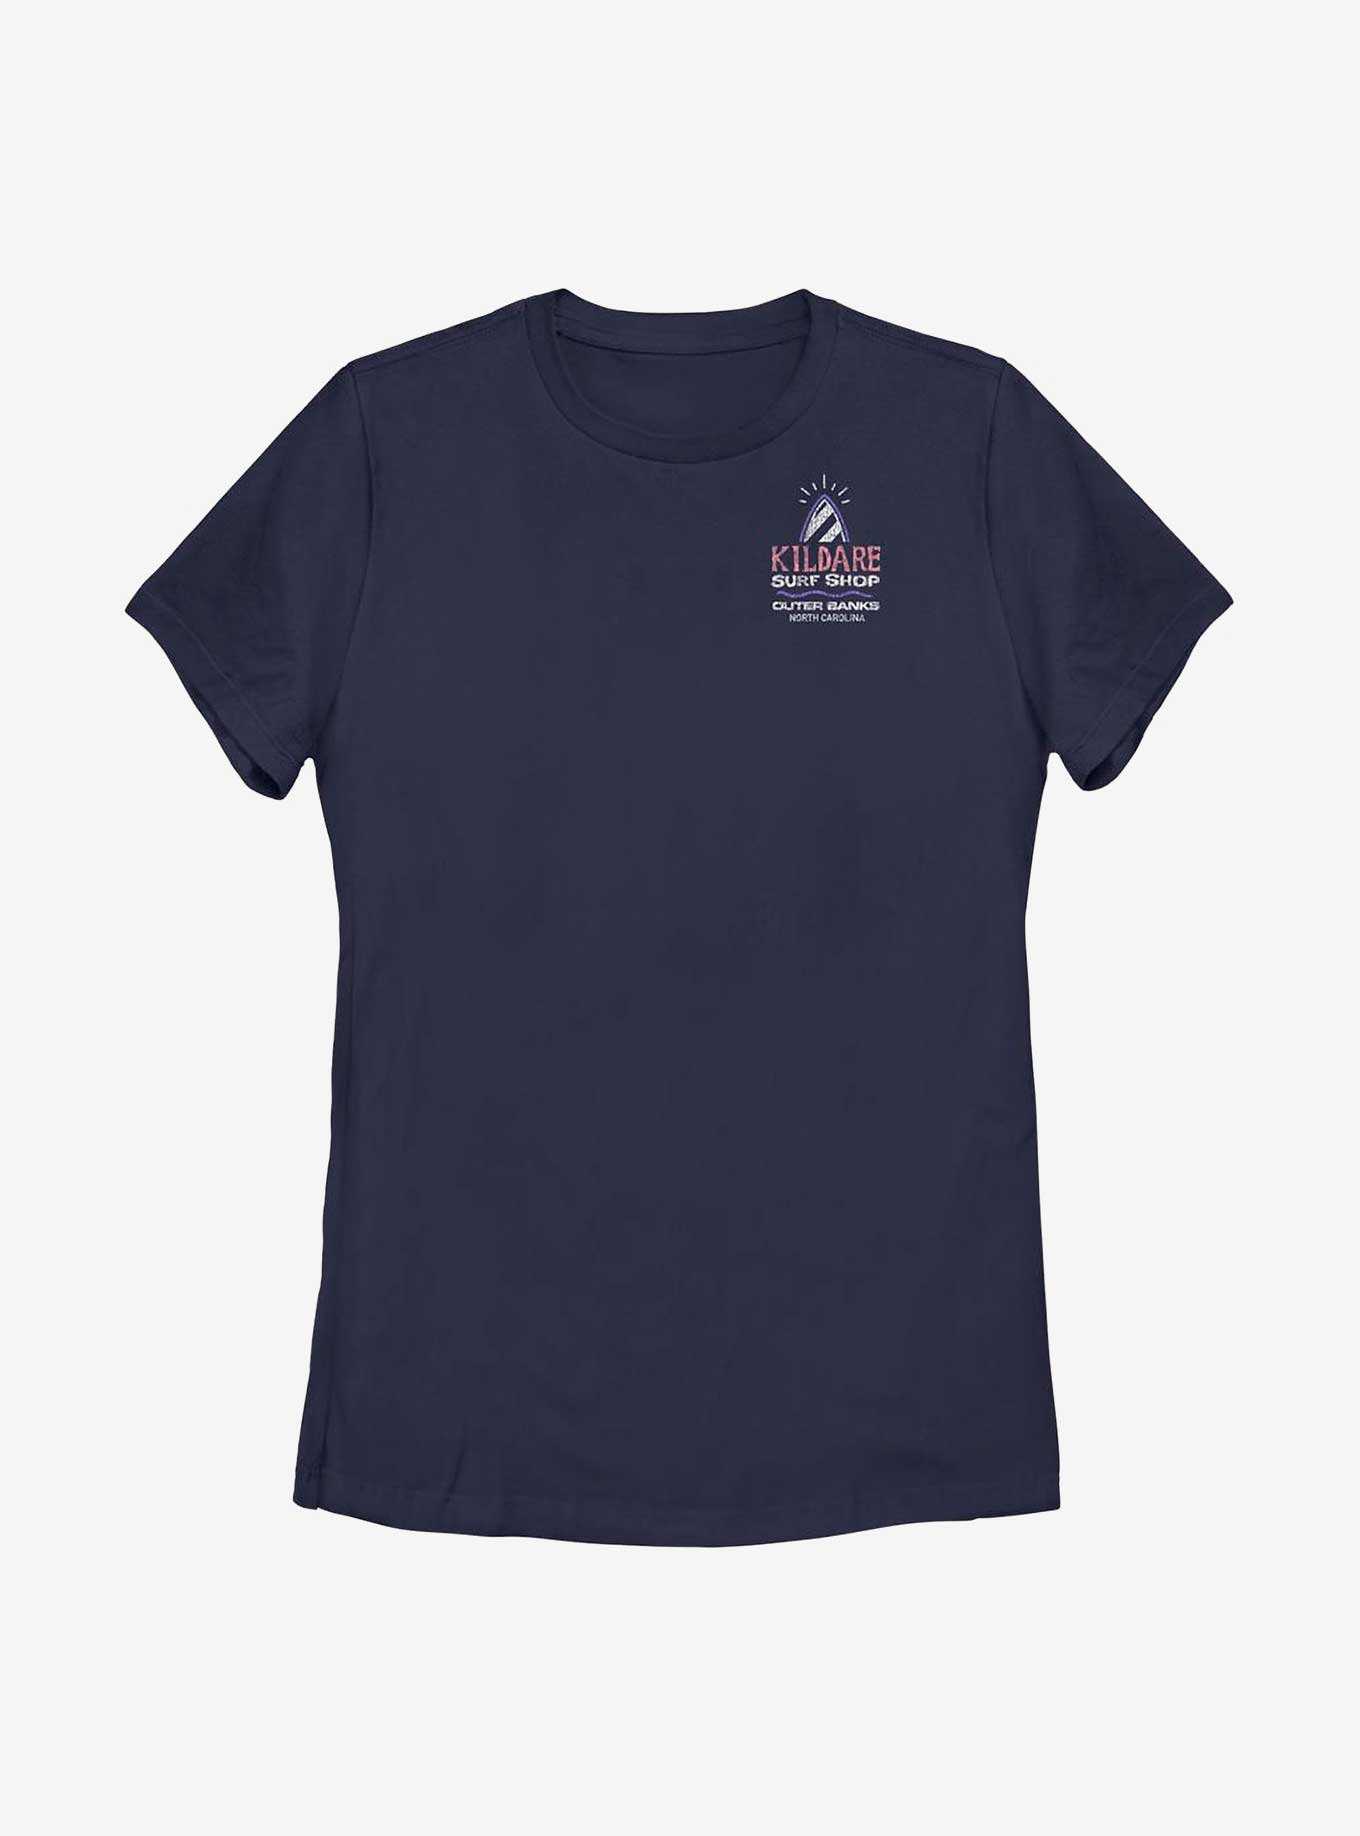 Outer Banks Kildare Surf Shop Womens T-Shirt, , hi-res